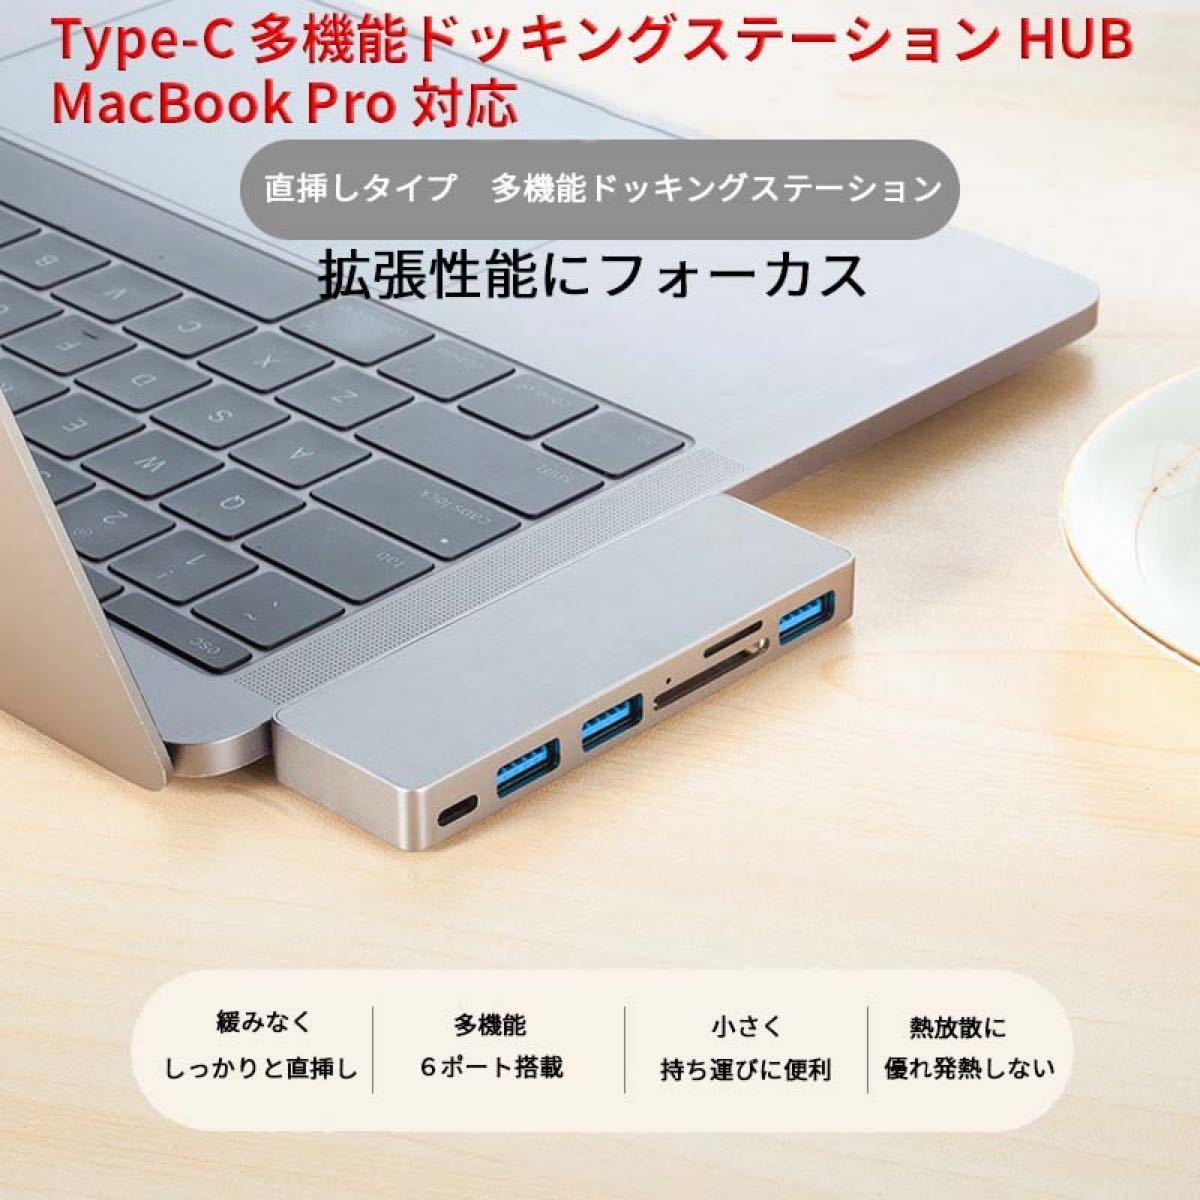 USB Hub Type-C ドッキングステーションMacBook Pro対応USB 3.0 Micro SD SDカード充電対応